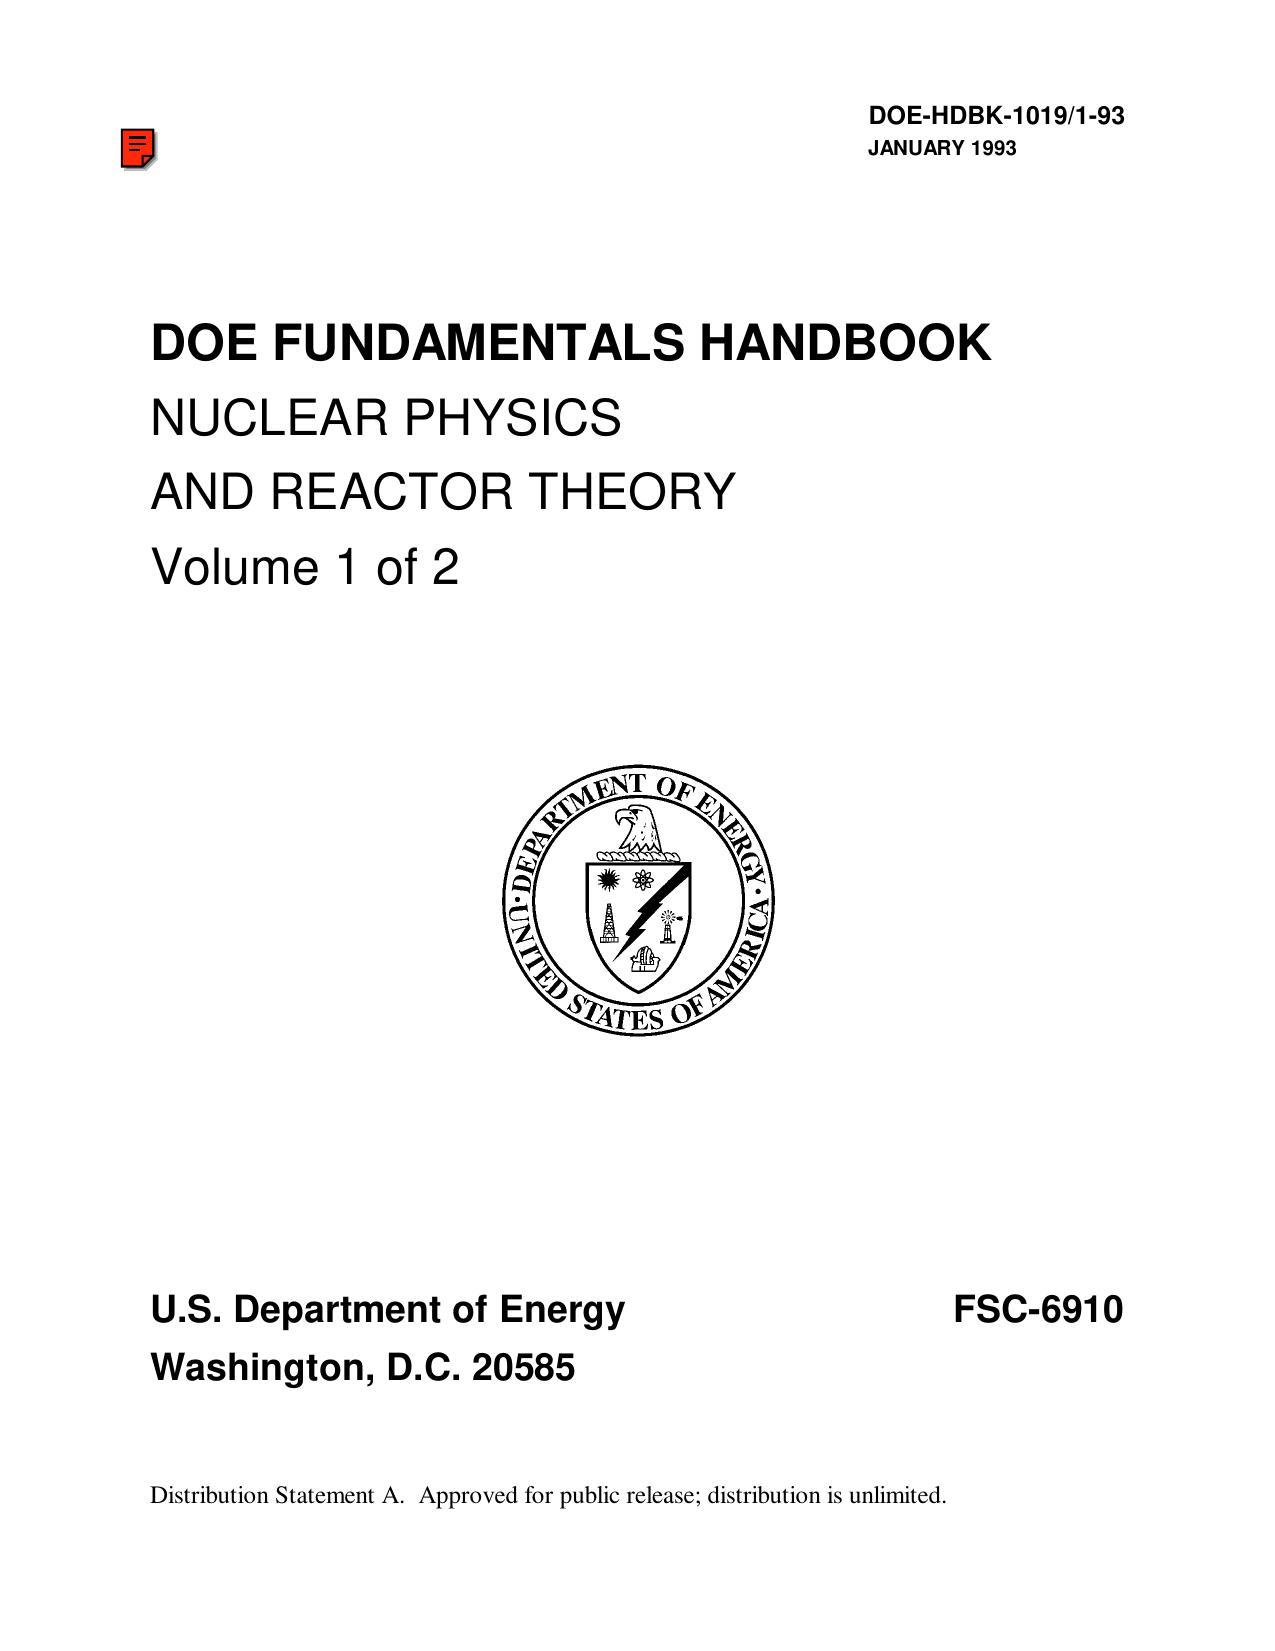 DOE-HDBK-1019/1-93; DOE Fundamentals Handbook Nuclear Physics and Reactor Theory Volume 1 of 2